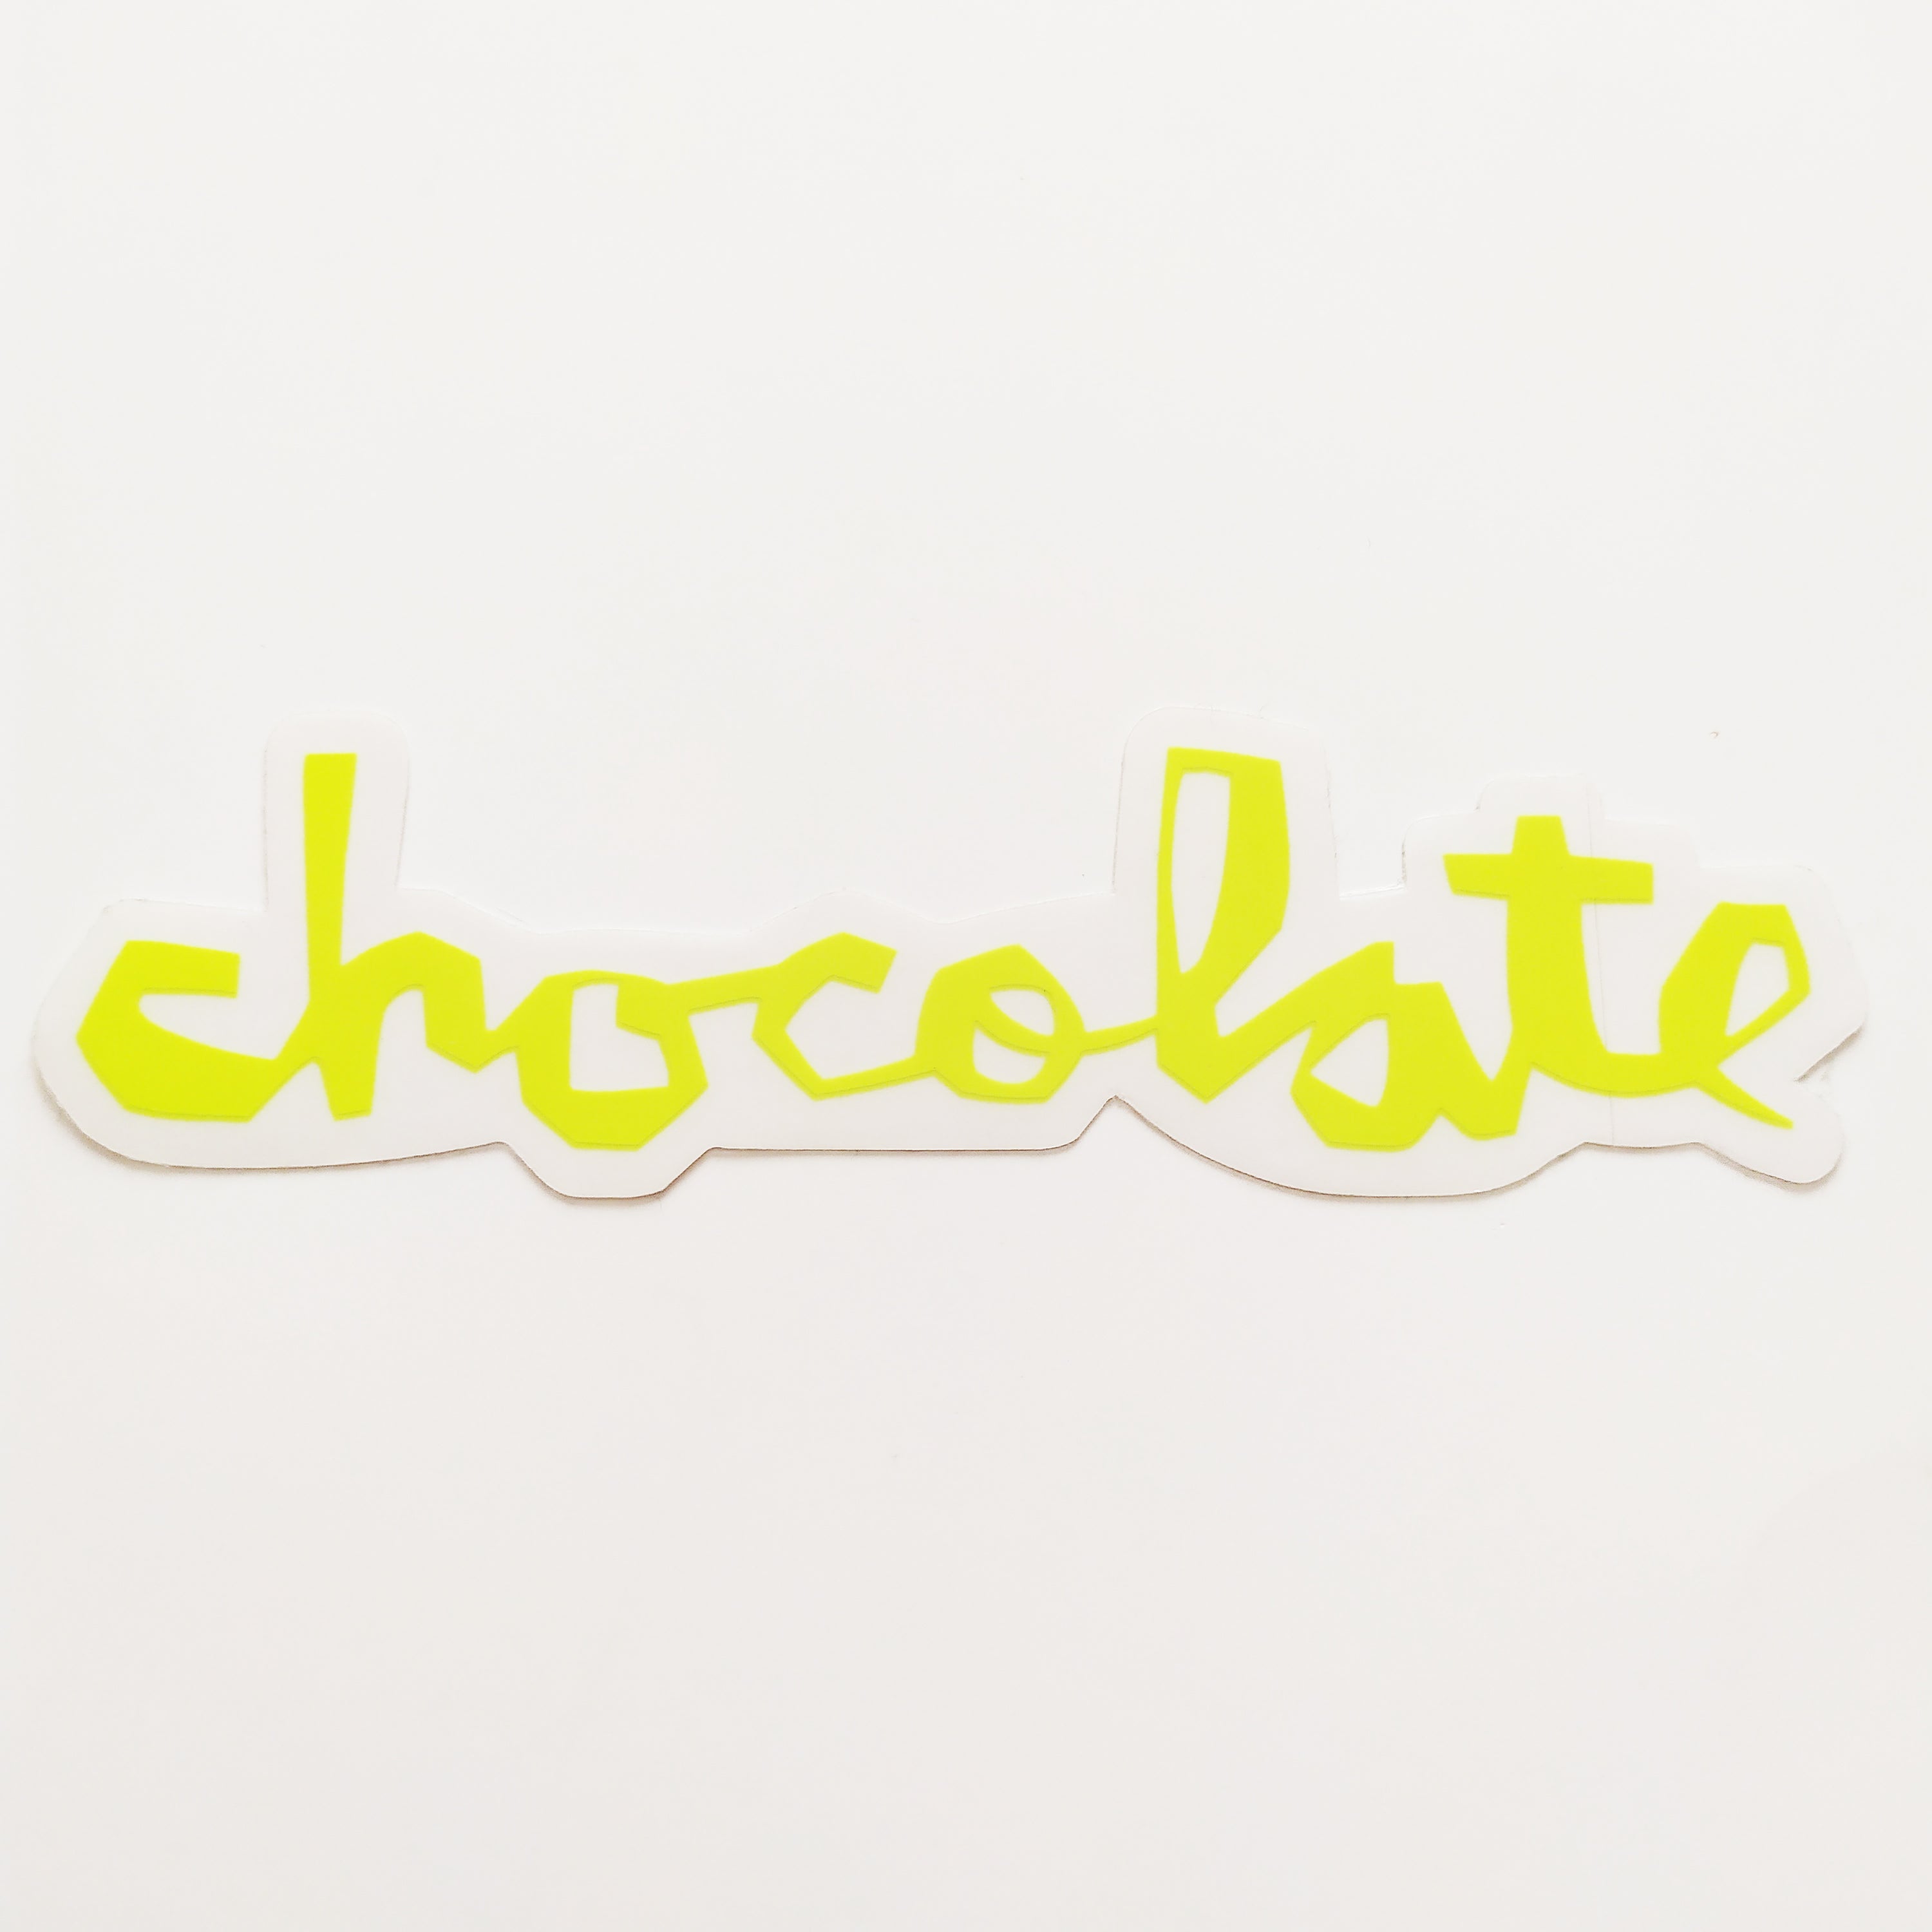 Chocolate Chunk Logo Skateboard Sticker - Lime Green - 8cm across approx - SkateboardStickers.com